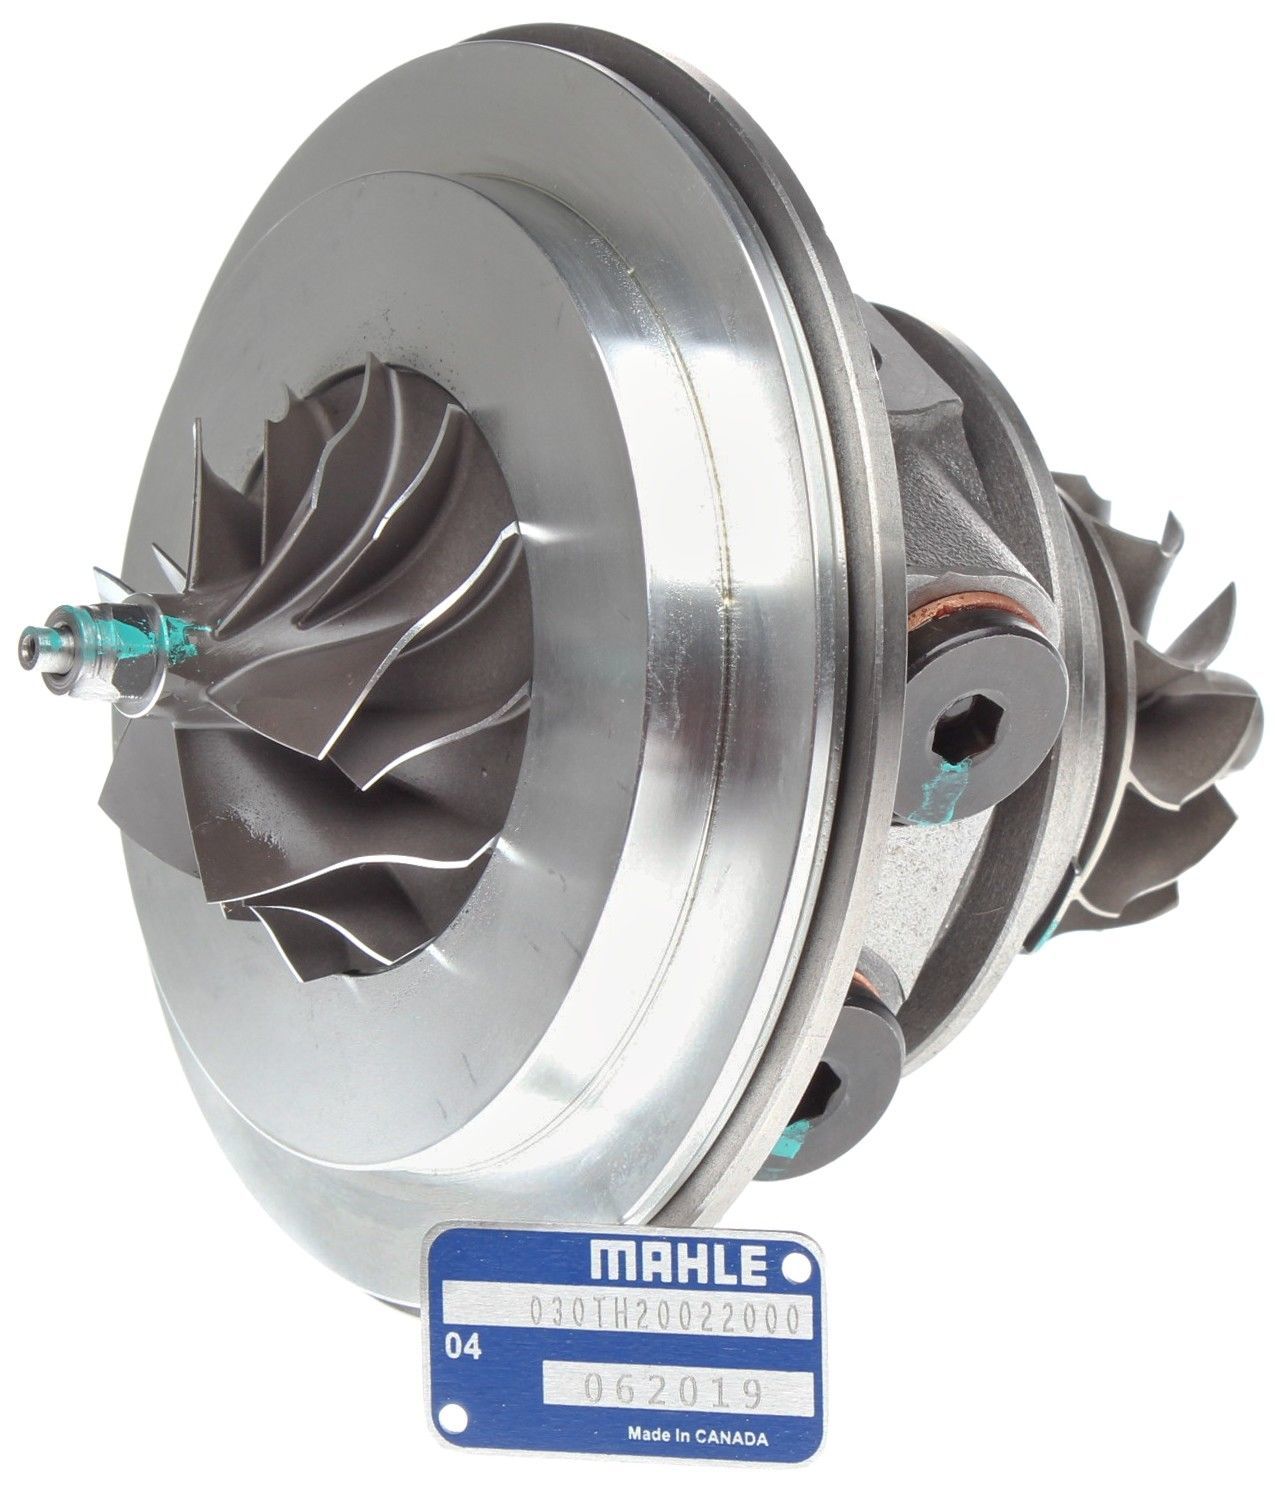 MAHLE ORIGINAL - Turbocharger Cartridge - MHL 030TH20022000